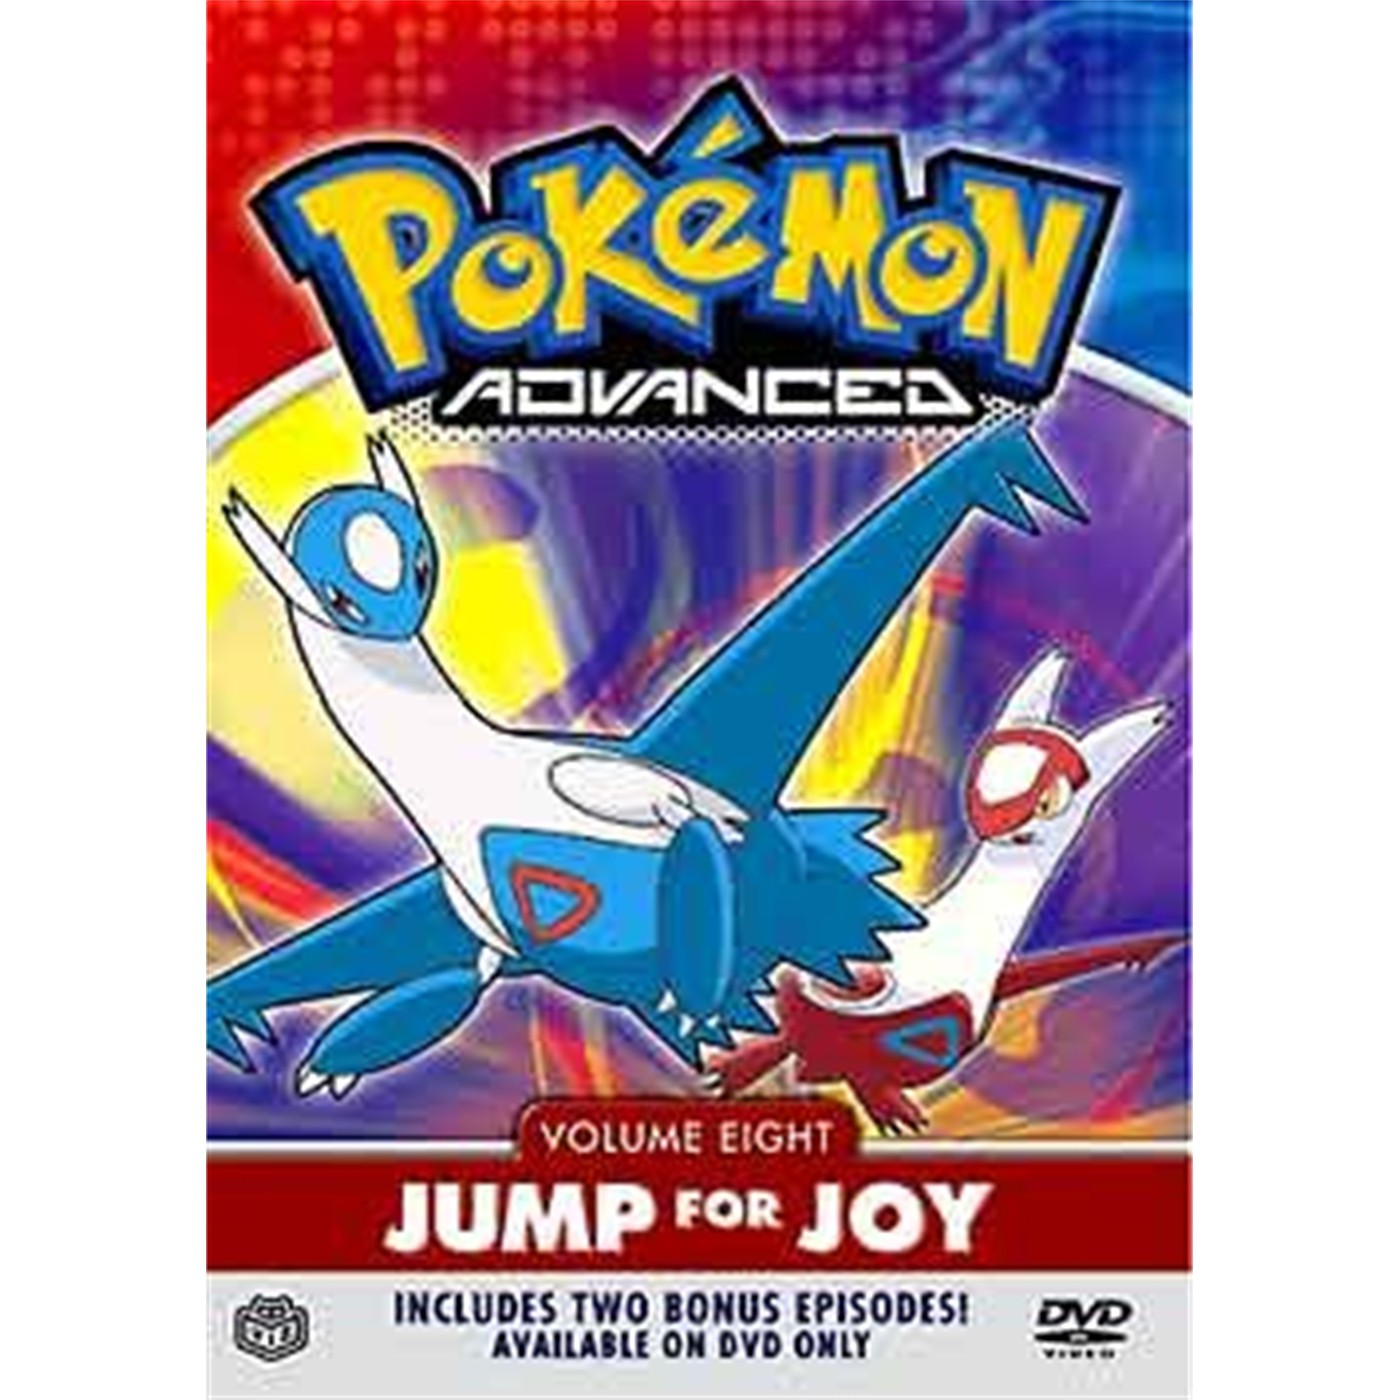 Pokemon Advanced, Vol. 8: Jump For Joy (DVD)